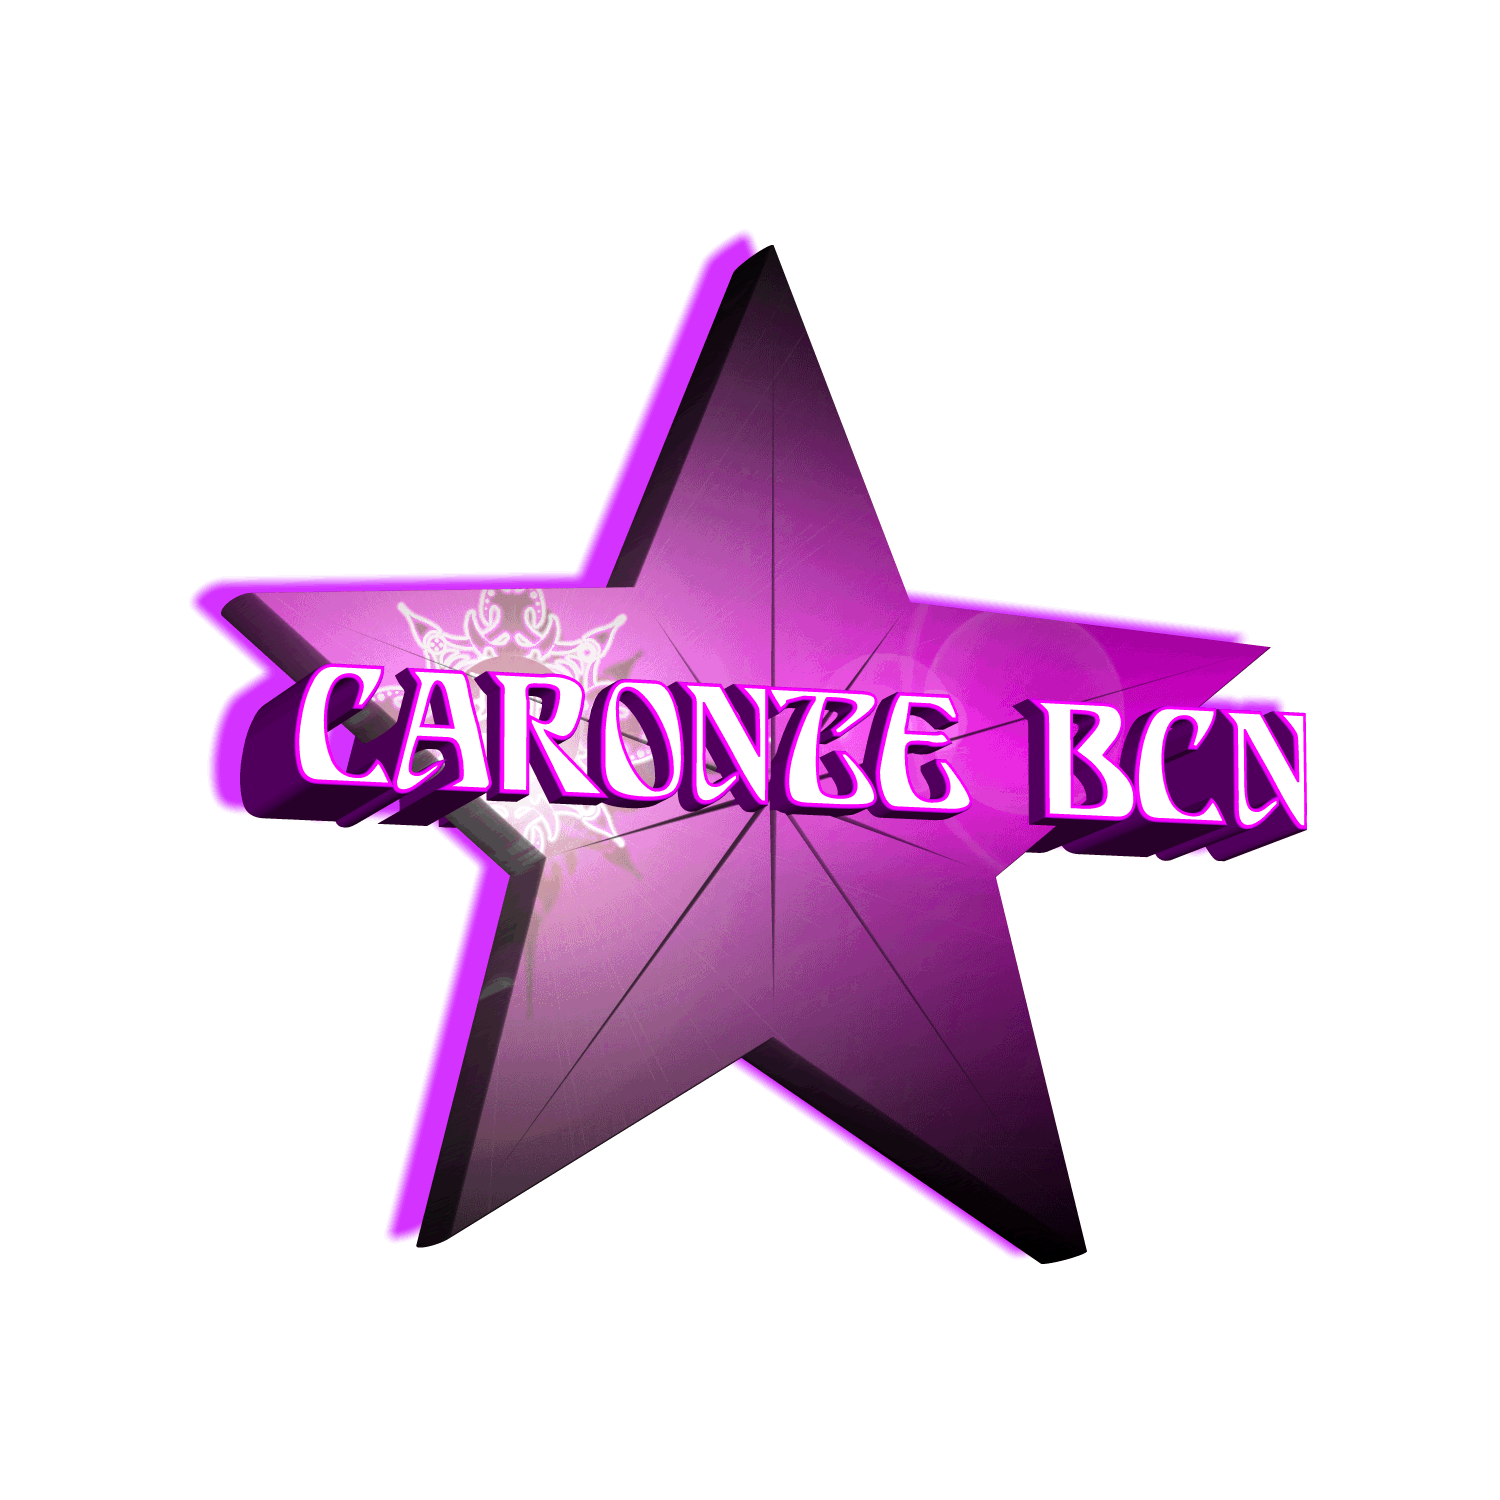 CAronte BCN STAR